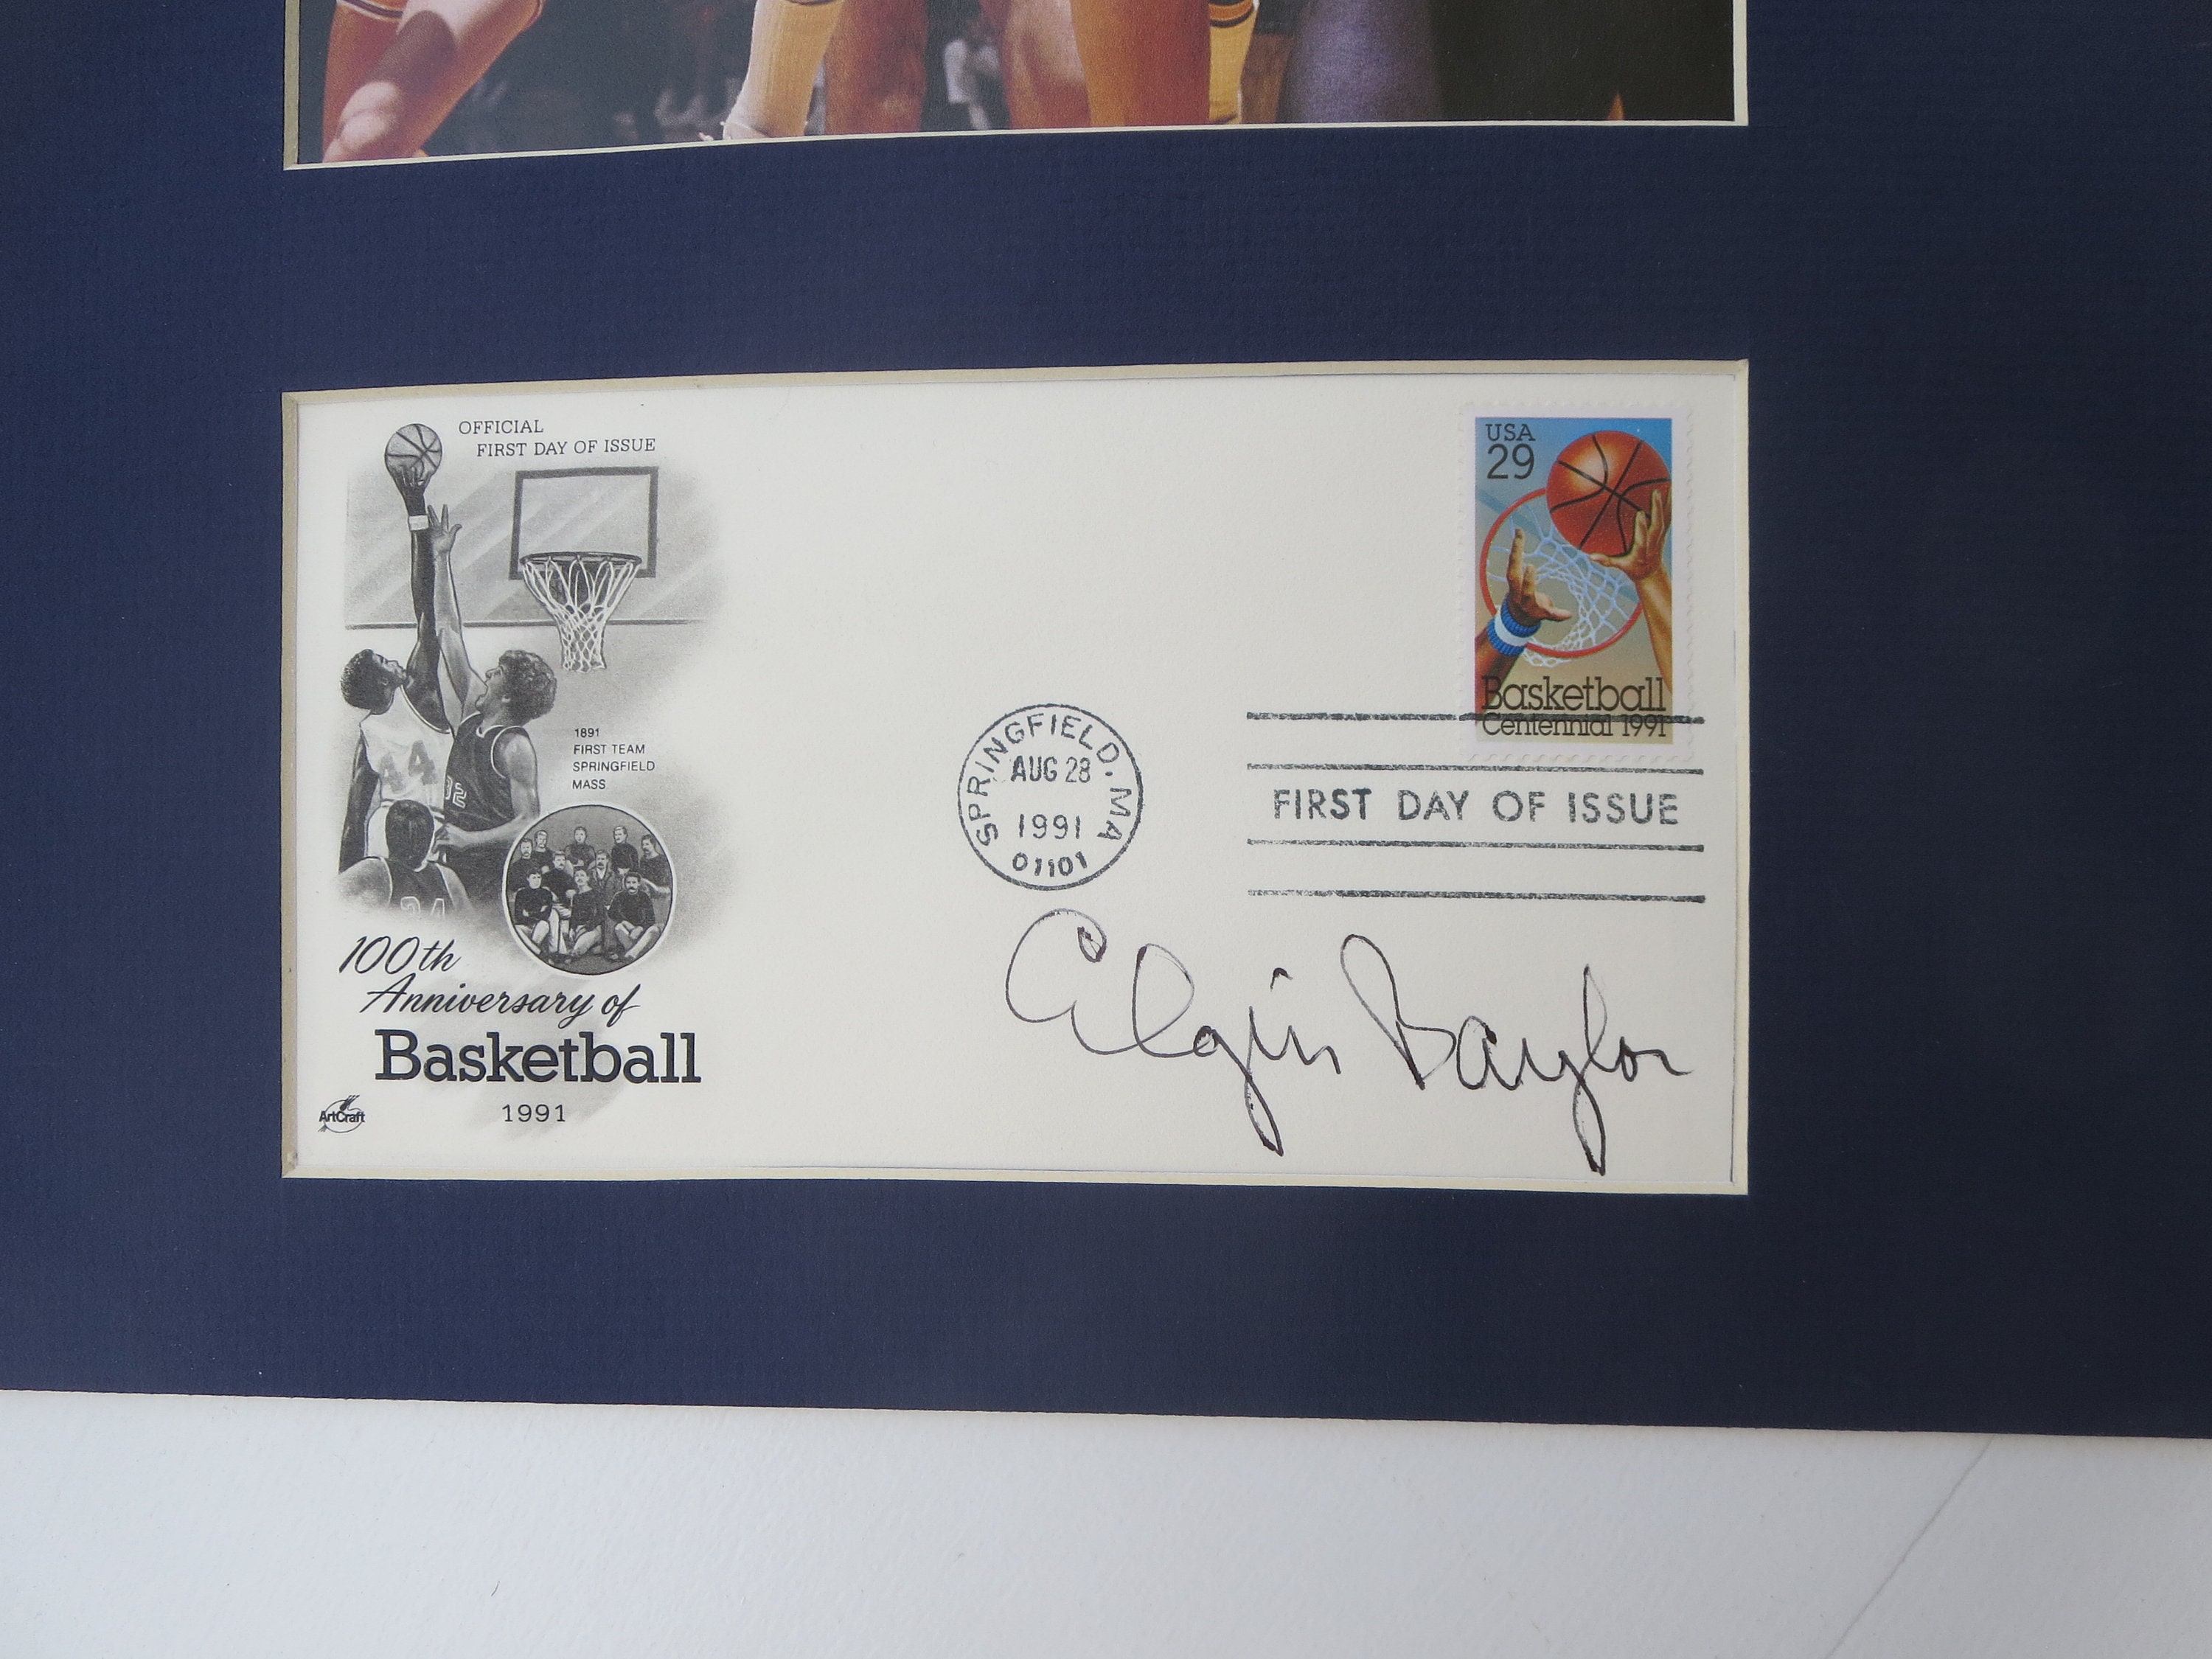 Elgin Baylor Autograph Vintage Los Angeles Lakers Hardwood